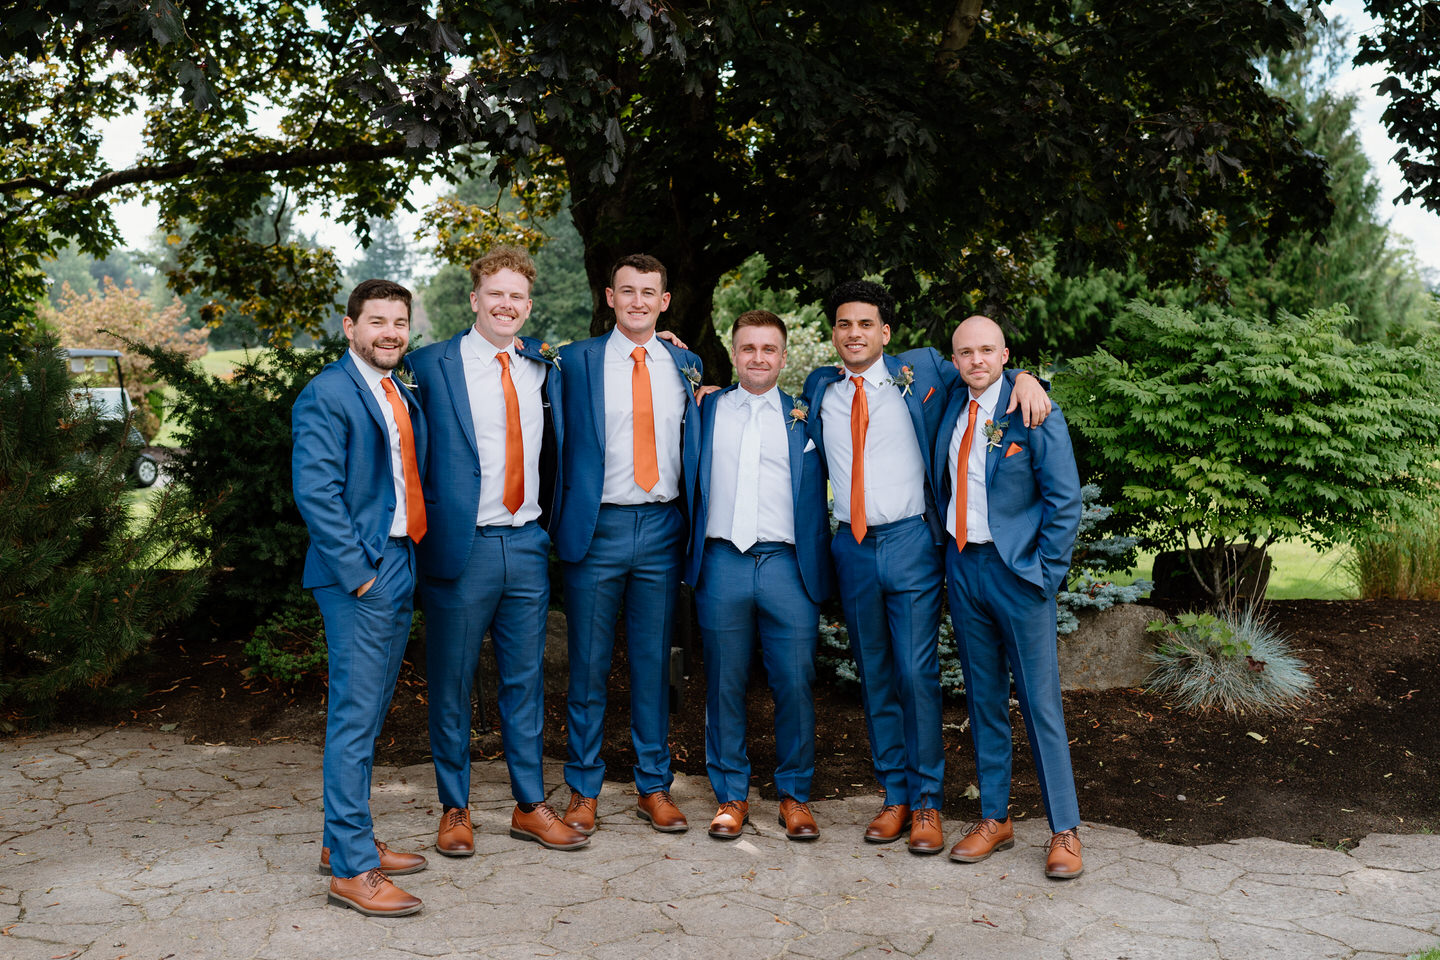 Groom and groomsmen smiling for formal portraits during Eugene, OR wedding